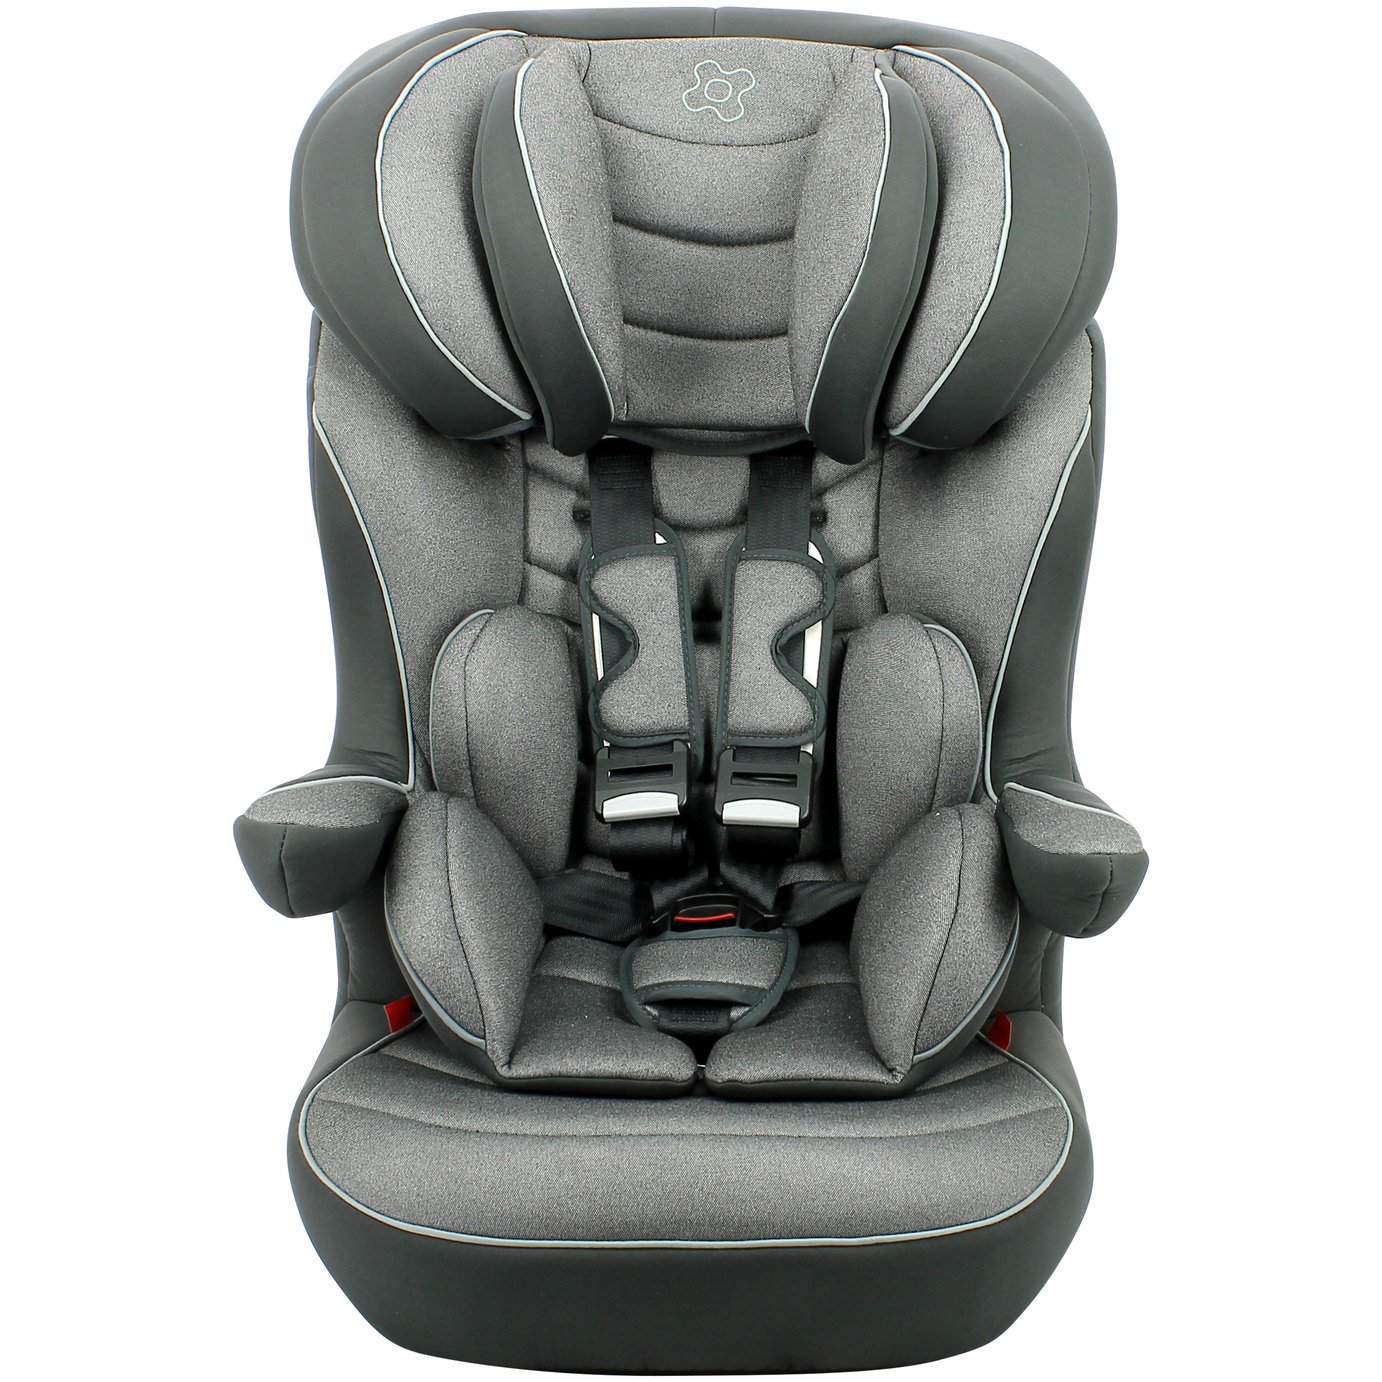 Migo Myla Group 1/2/3 ISOFIX Platinum Car Seat Review